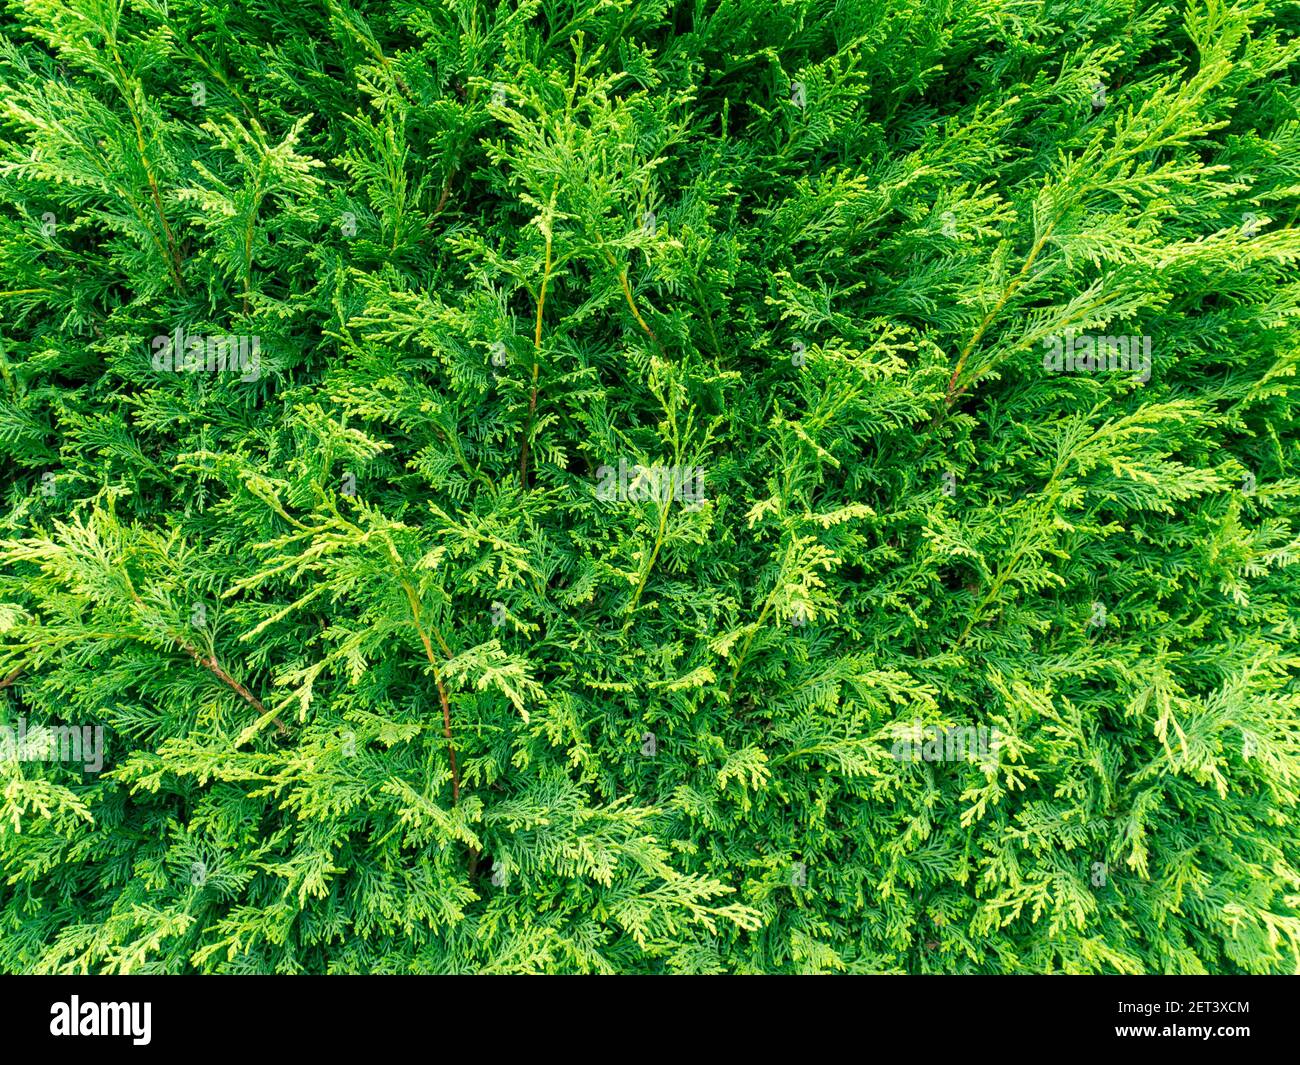 Lush green thuja hedge background. Stock Photo